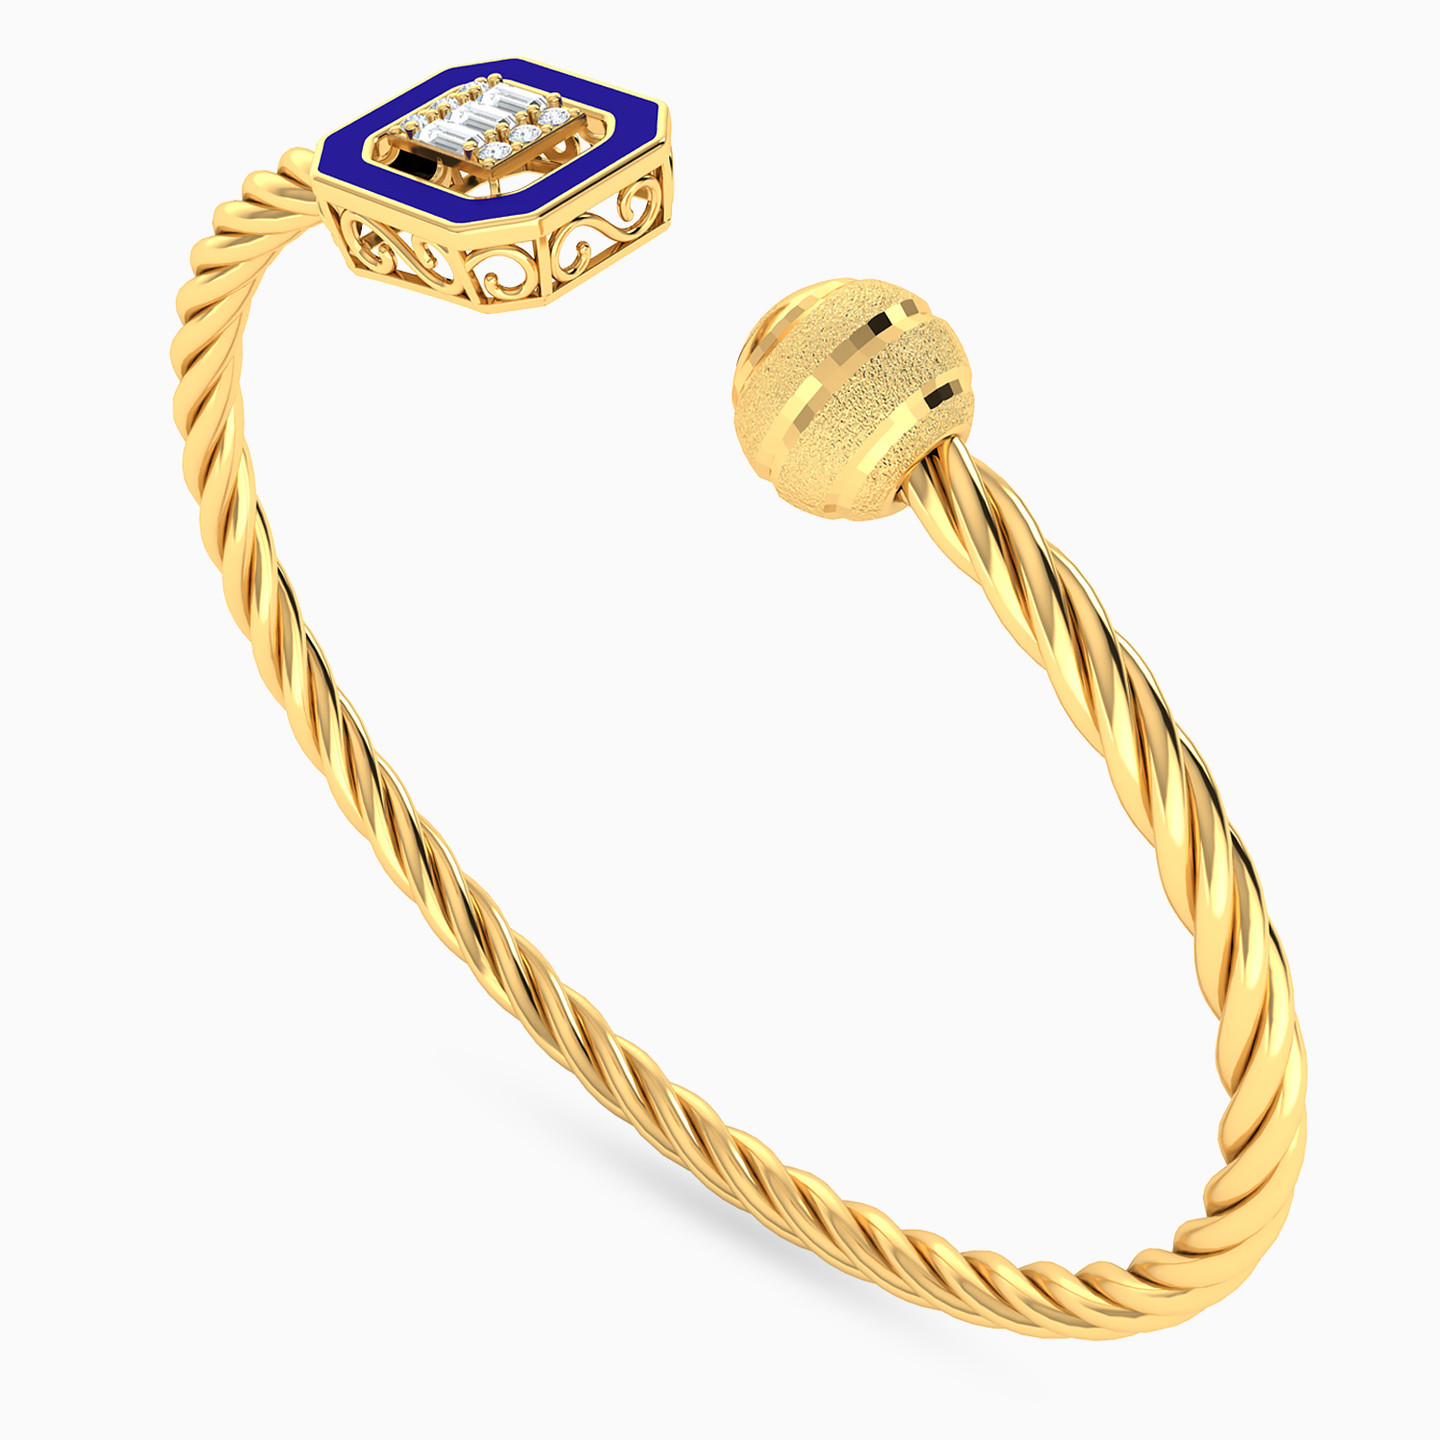 18K Gold Colored Stones & Enamel Coated Cuff Bracelet - 3